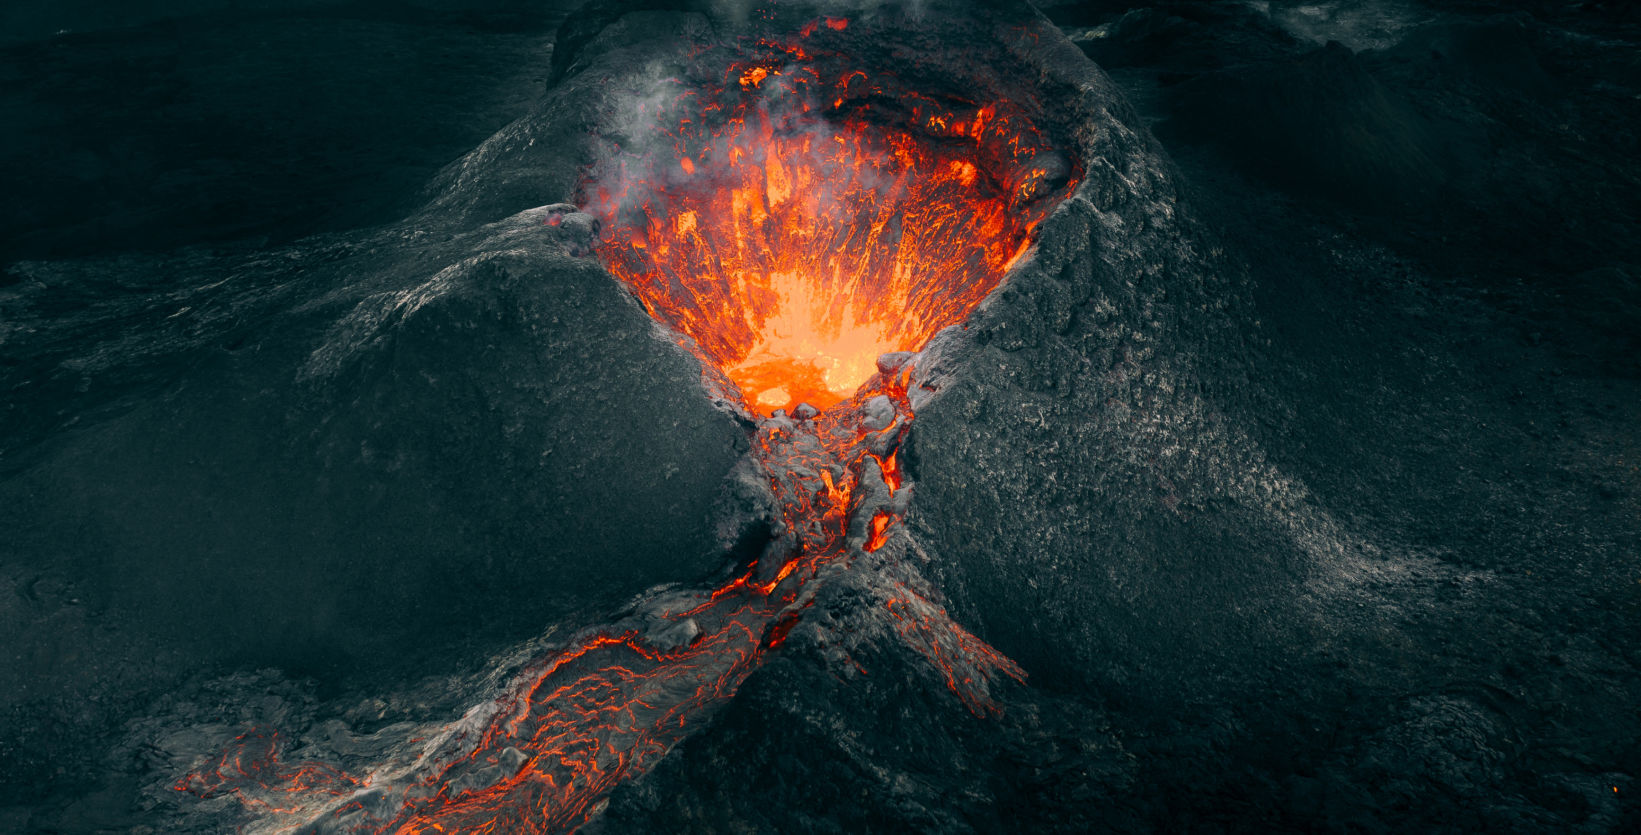 Flowing lava